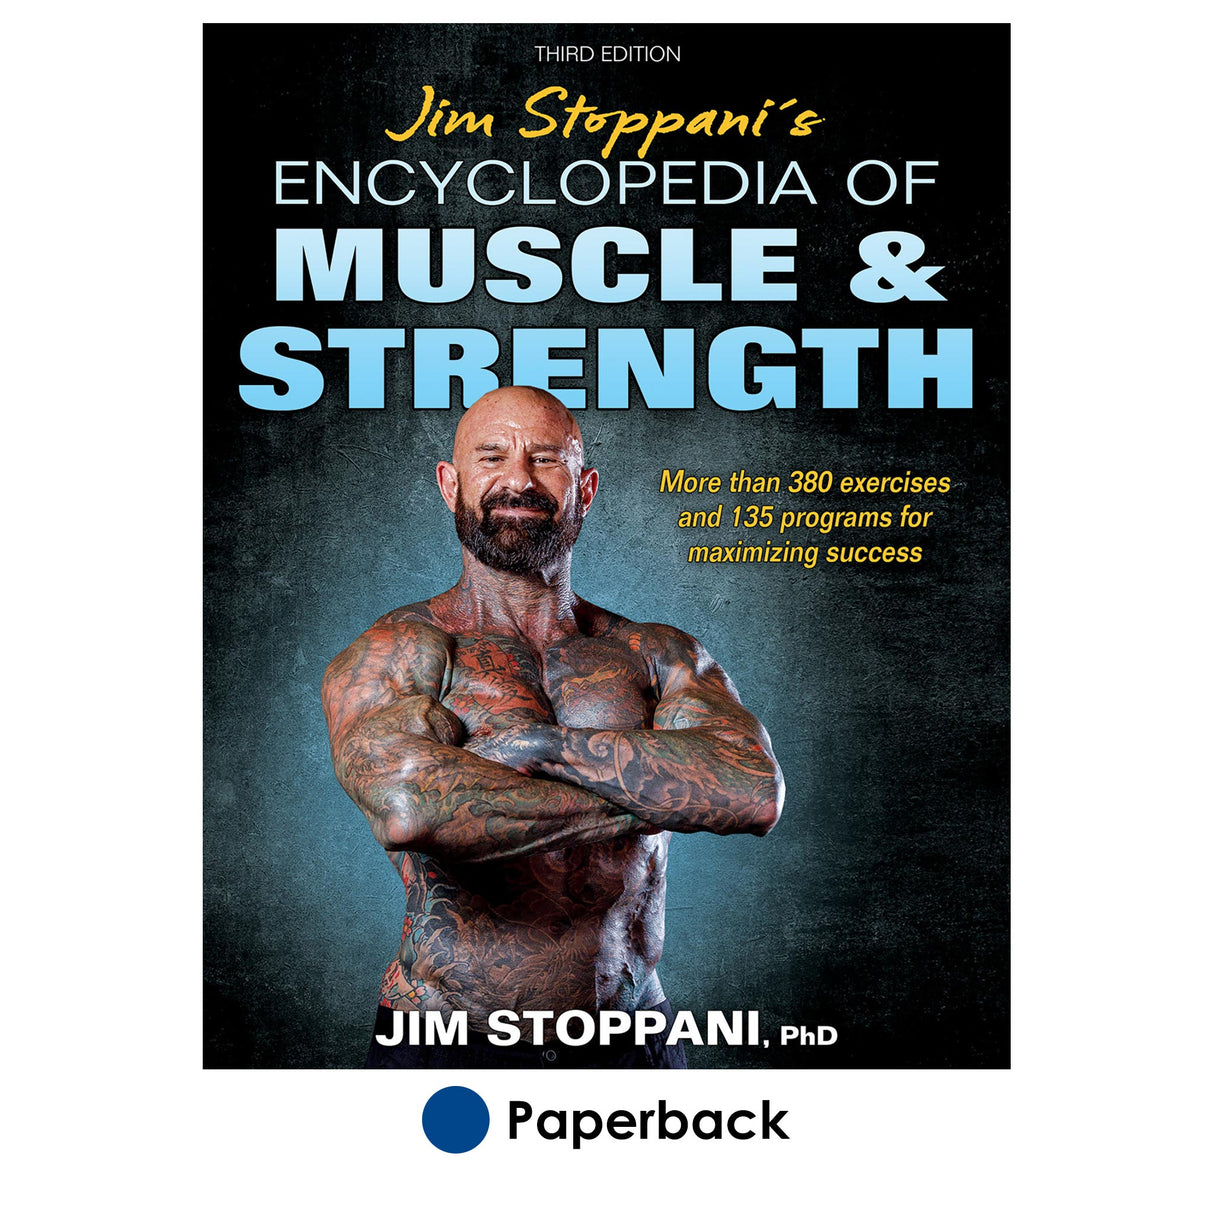 Jim Stoppani's Encyclopedia of Muscle & Strength-3rd Edition